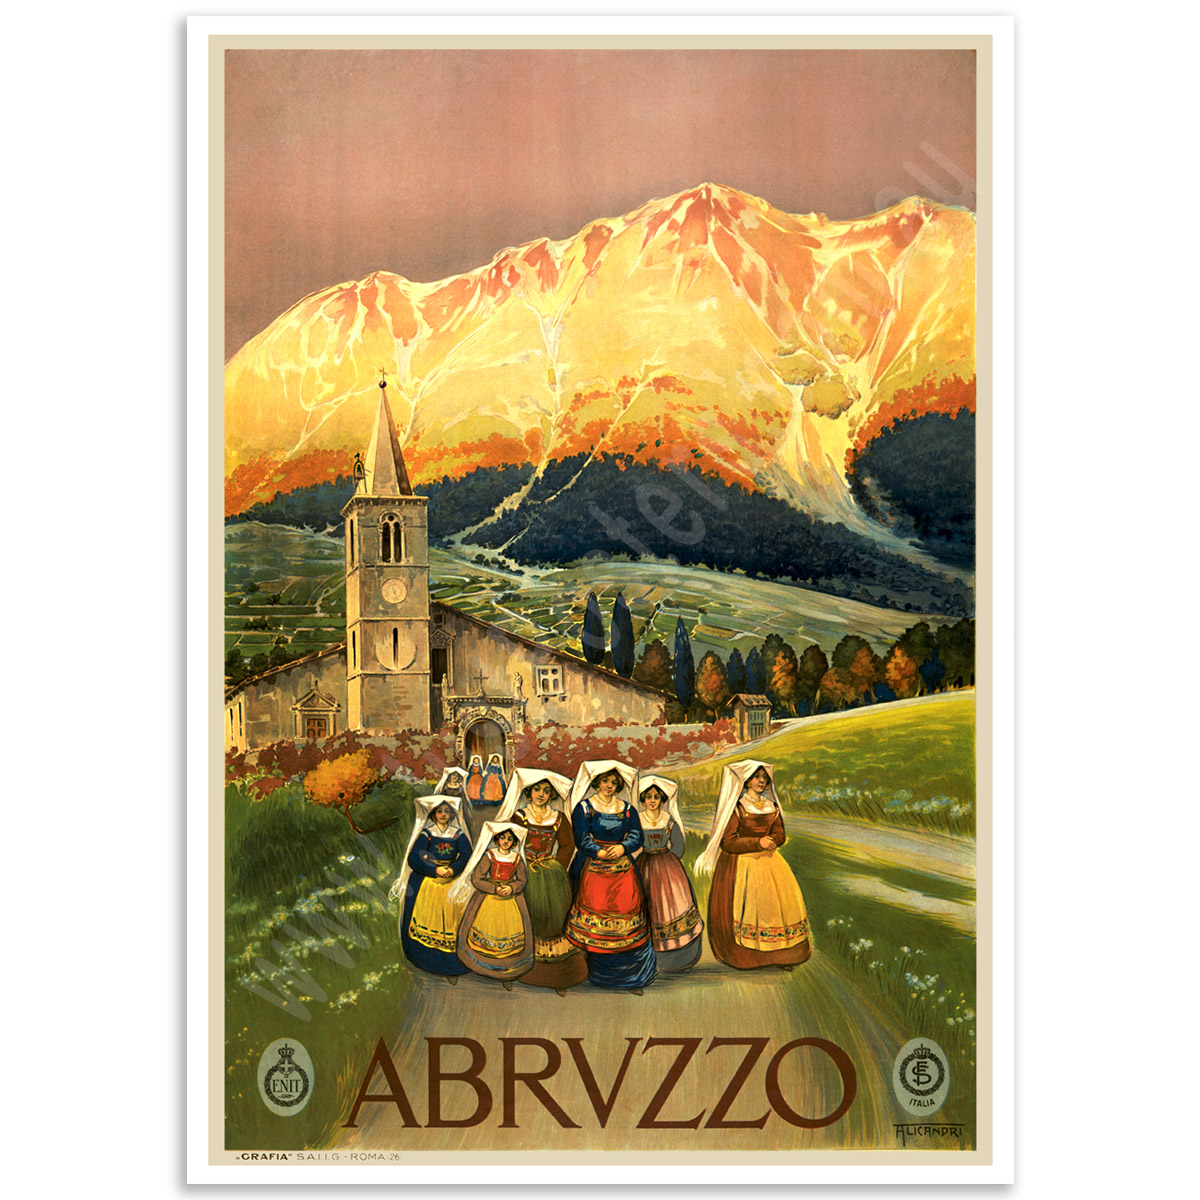 Vintage Travel Poster - Abruzzo